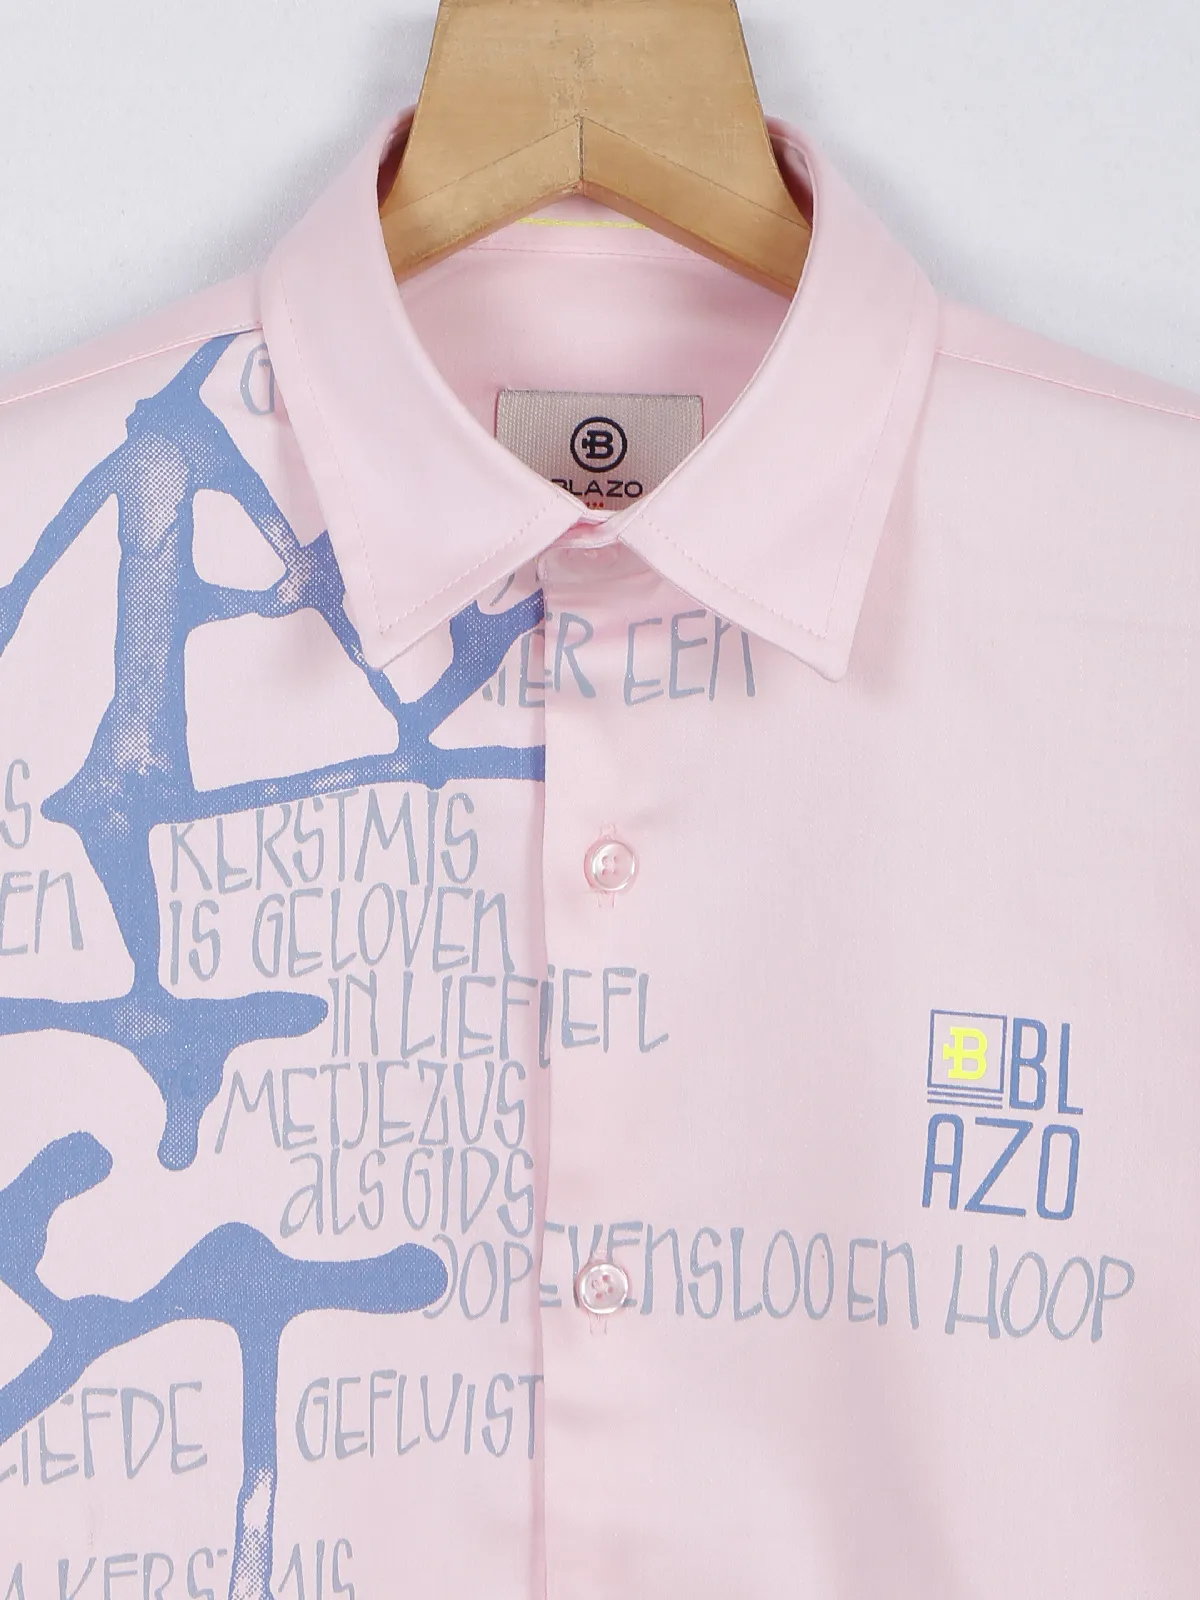 Blazo light pink cotton printed shirt